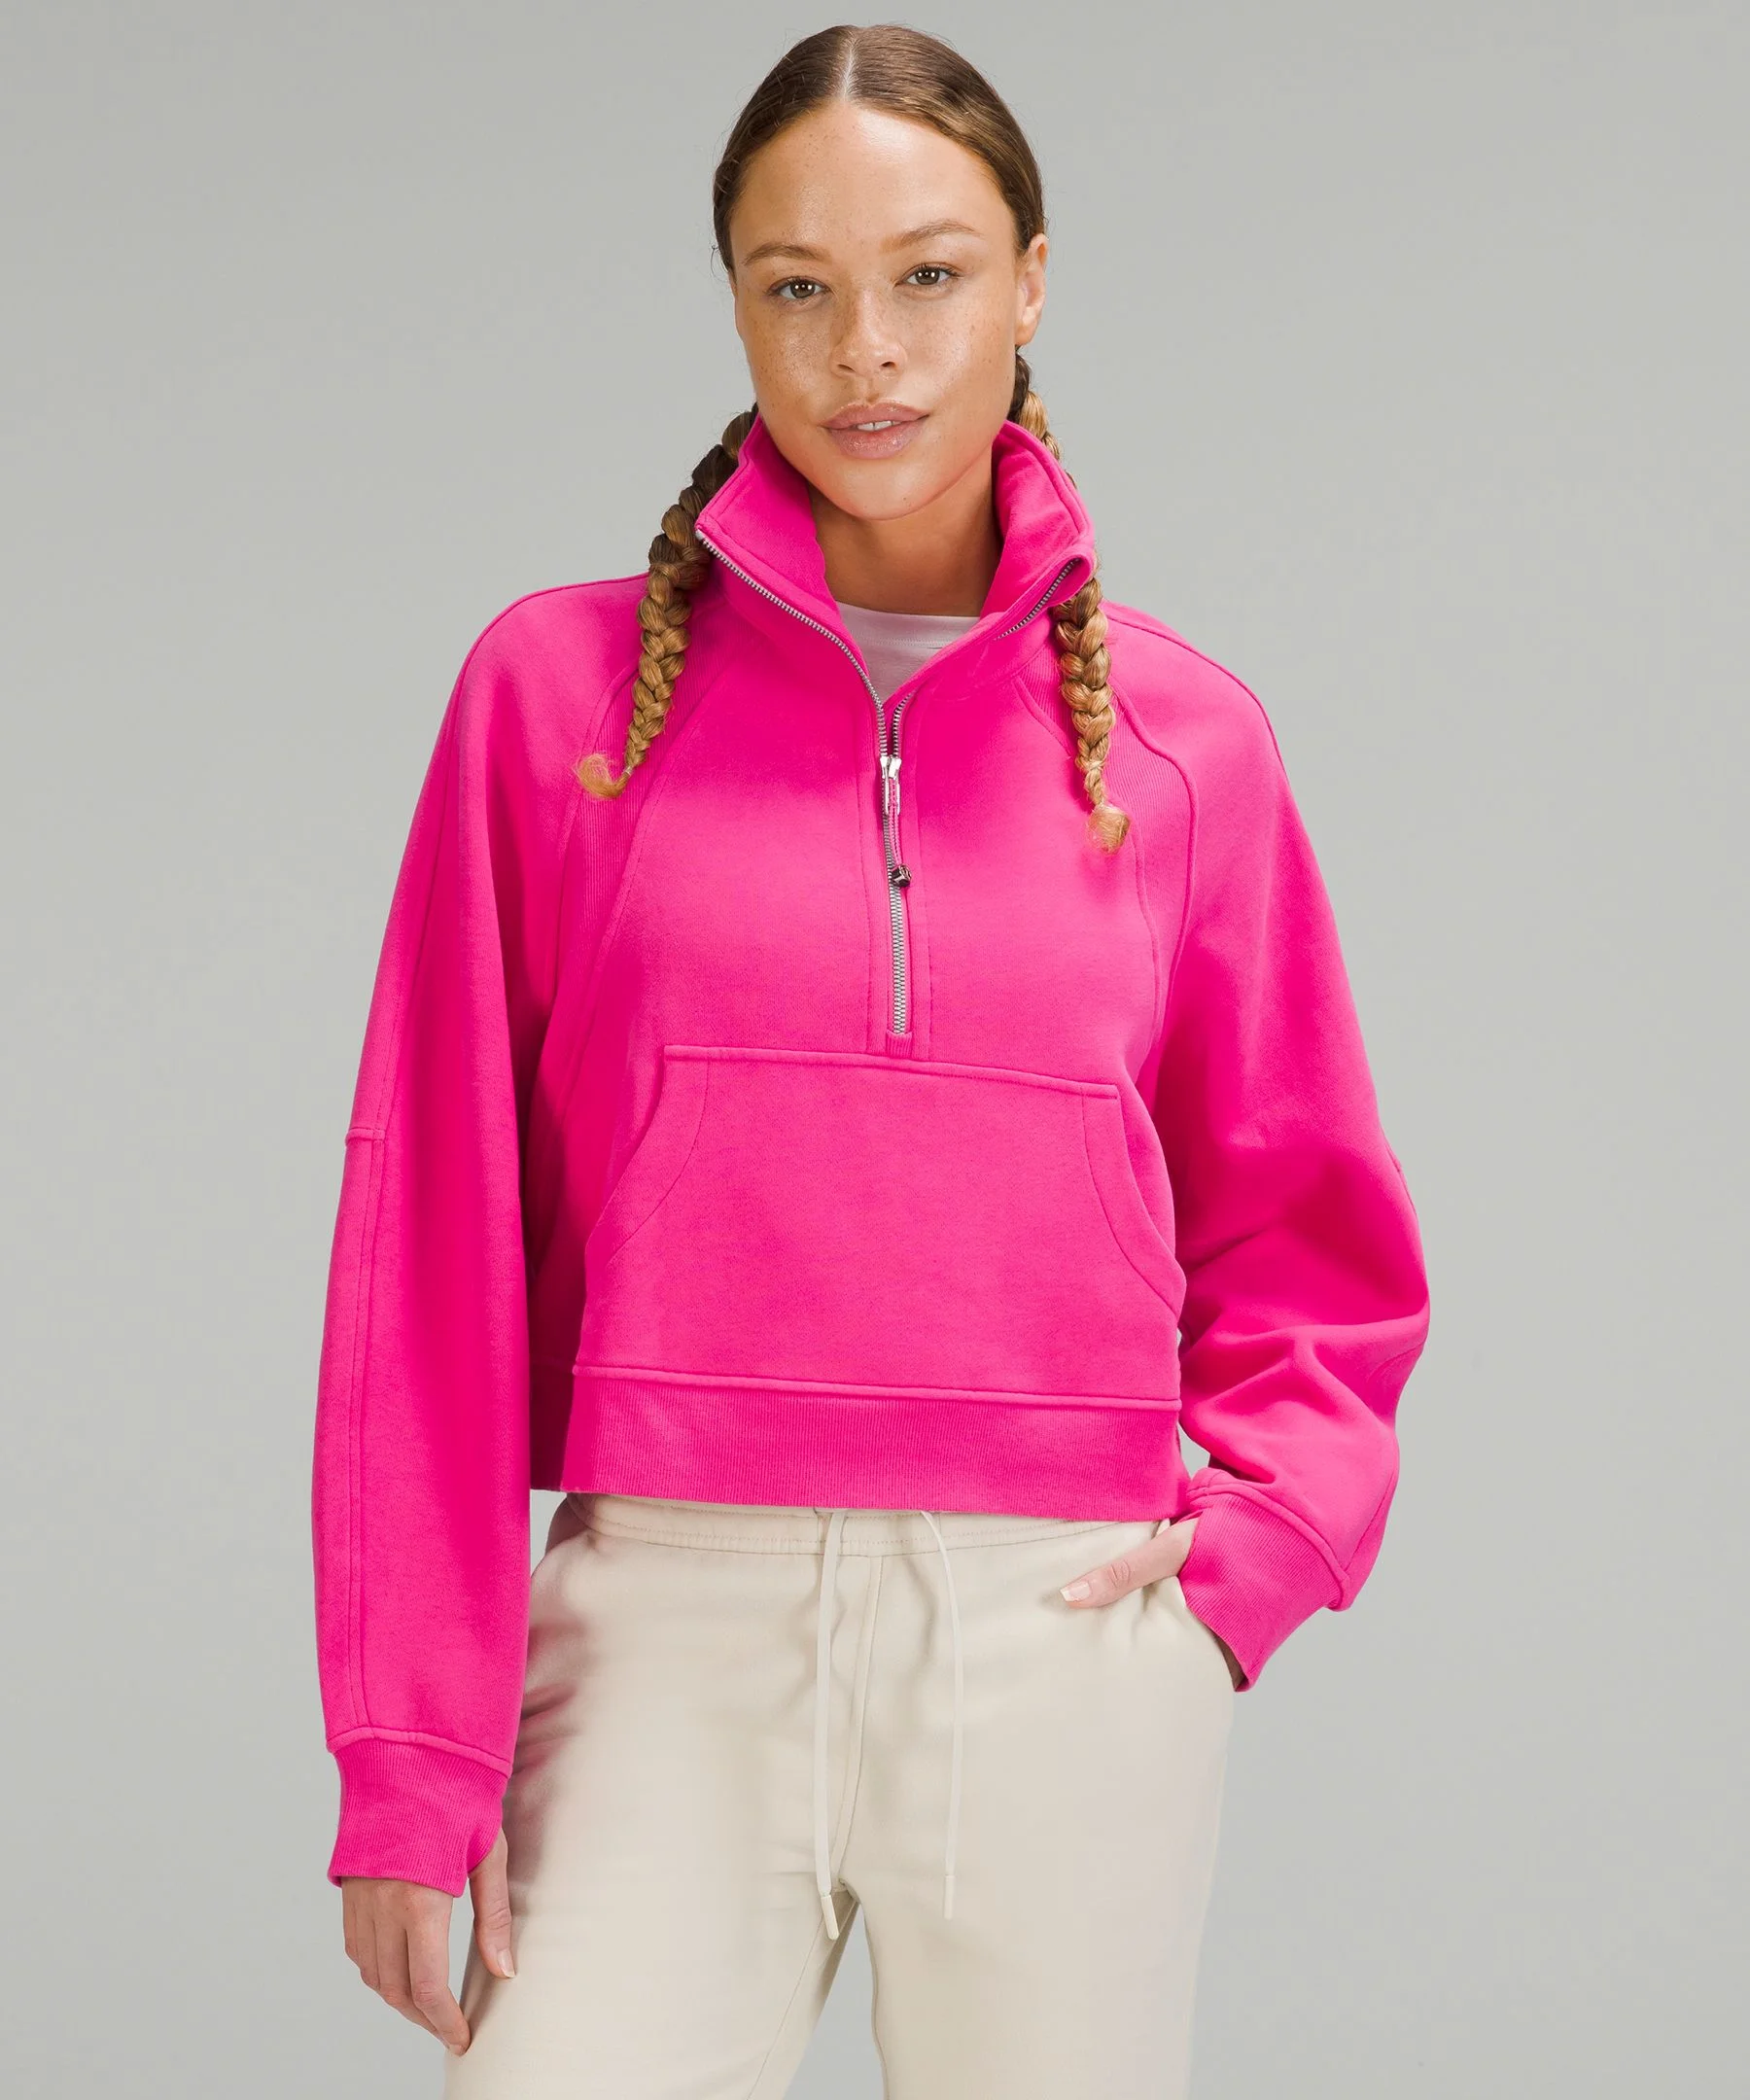 Lululemon scuba oversized half zip hoodie pale pink xl/xxl - $114 - From Ava